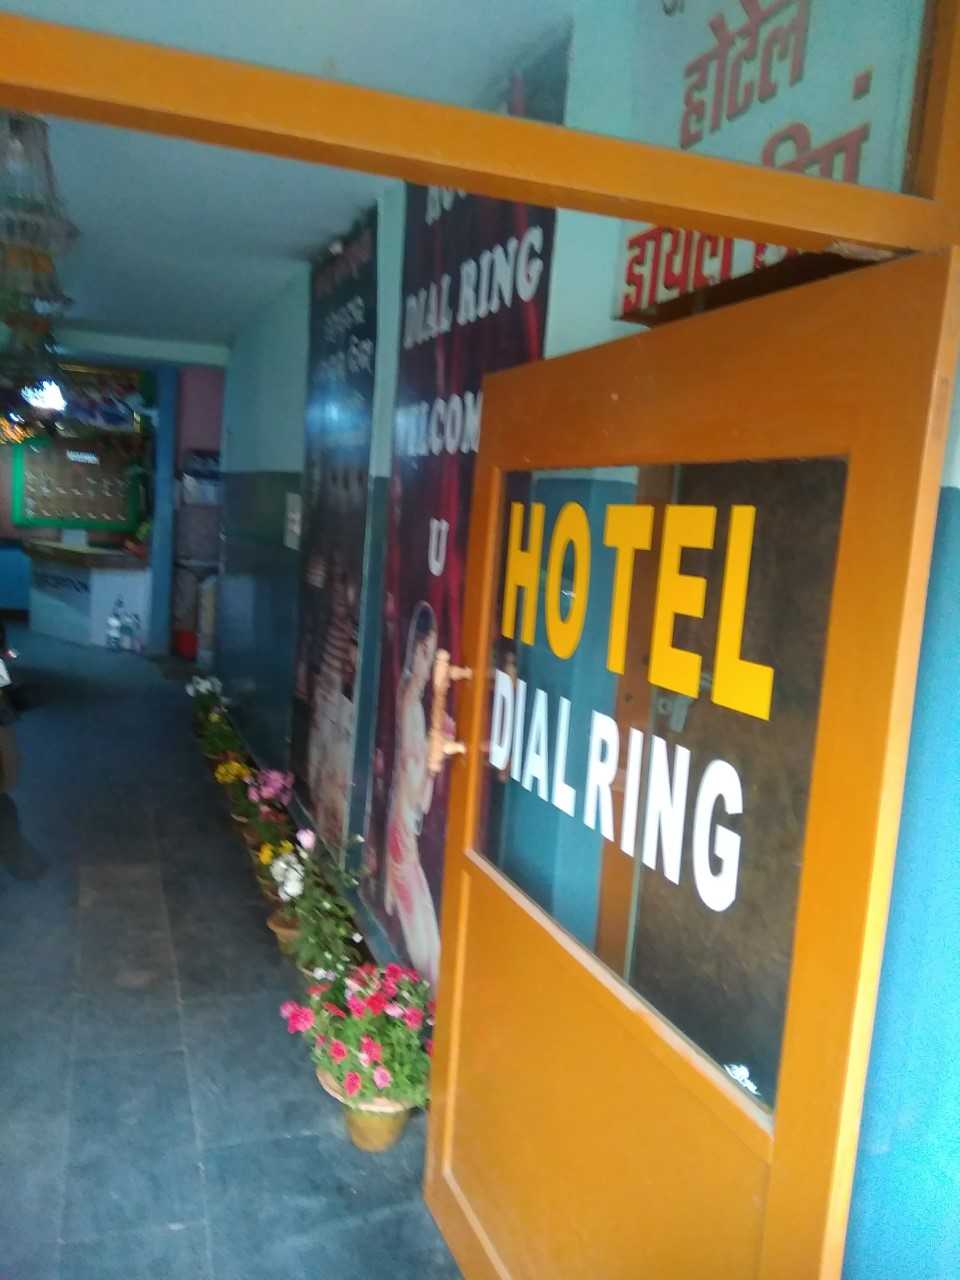 Richi Palace Hotel Puri, Rooms, Rates, Photos, Reviews, Deals, Contact No  and Map